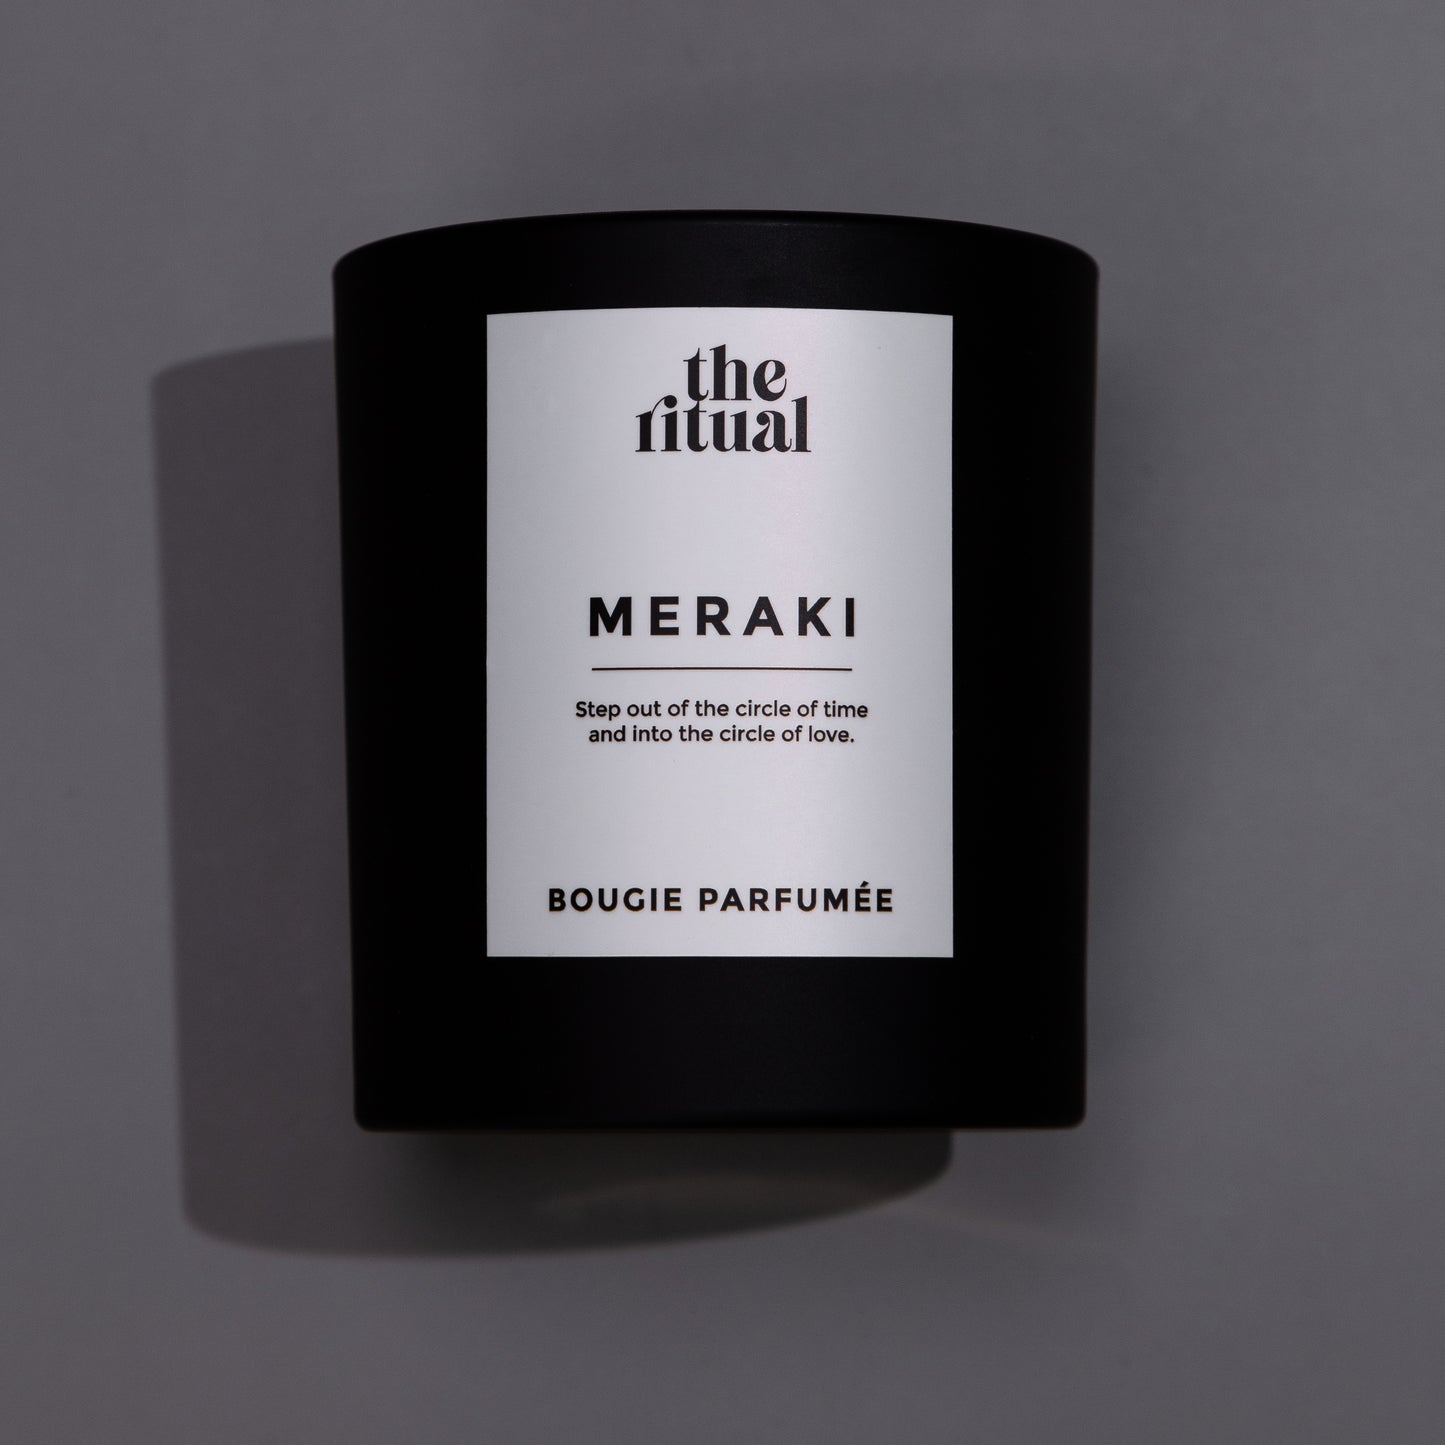 Meraki- 8oz Candle Bougie Parfumee